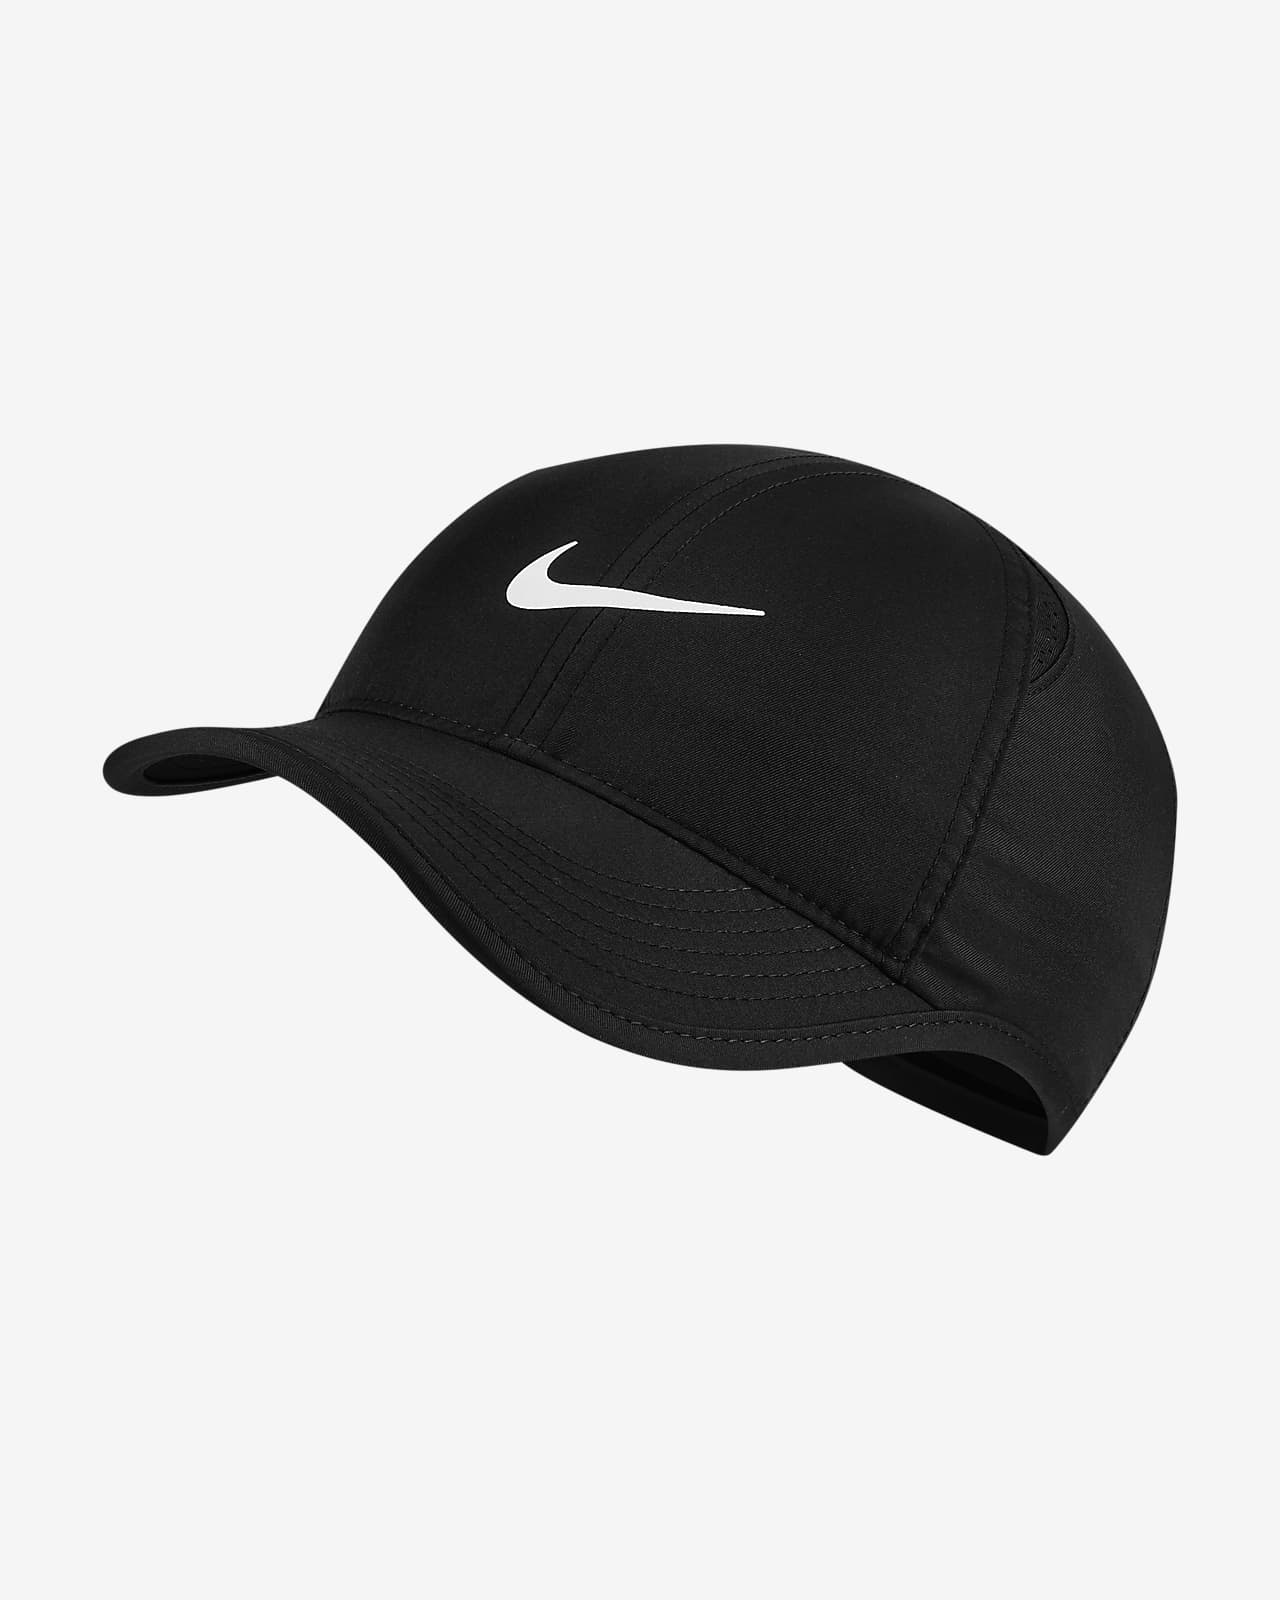 Nike Sportswear AeroBill Featherlight Women's Adjustable Cap